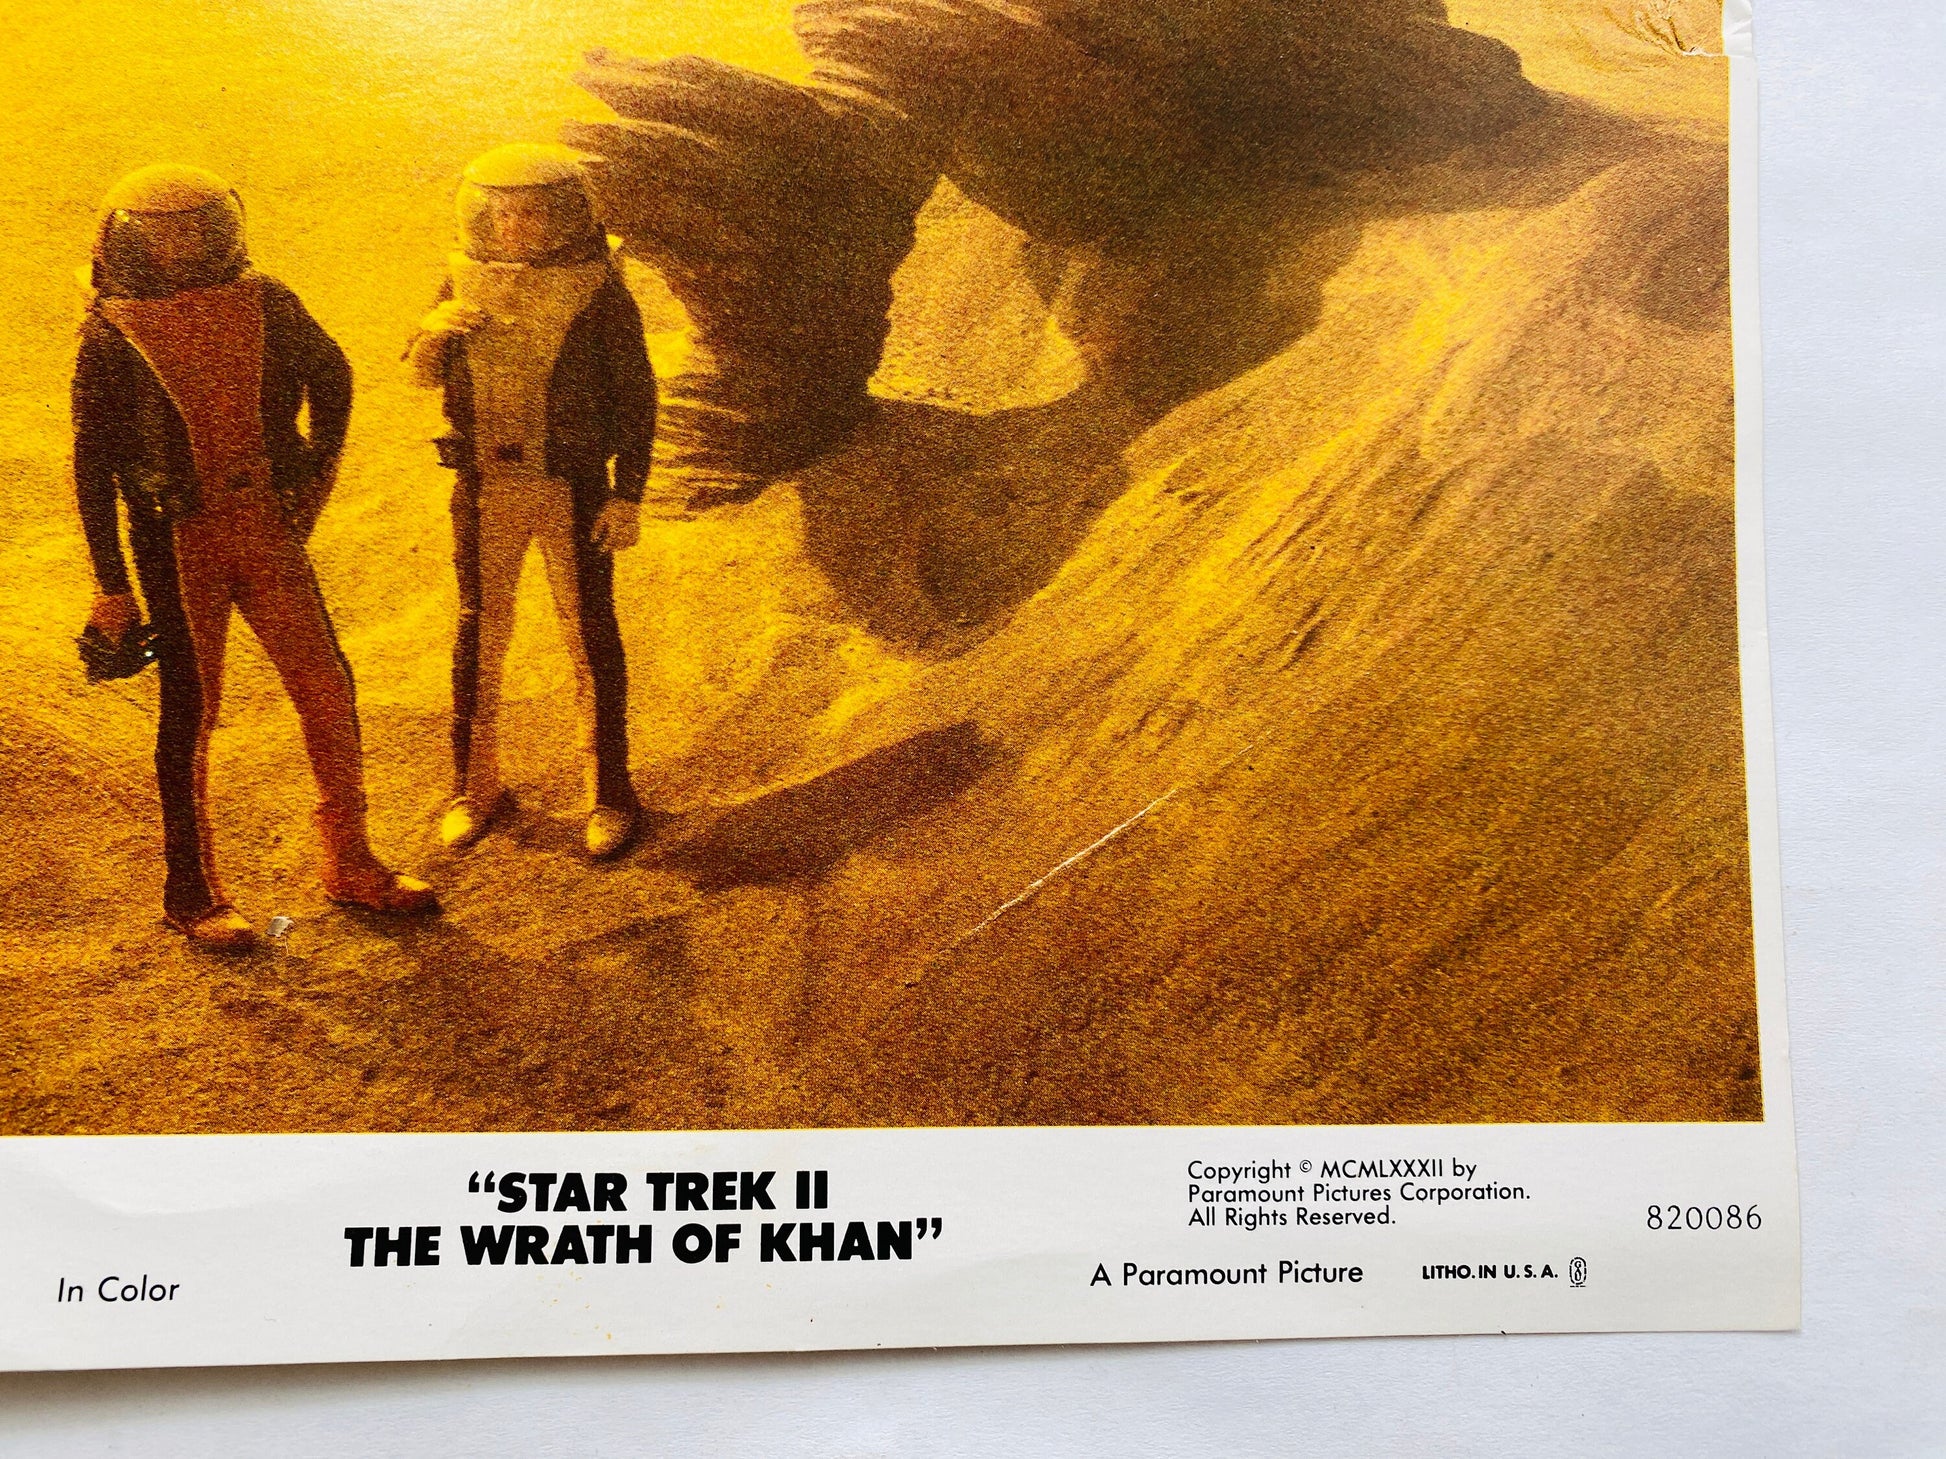 RARE Star Trek ORIGINAL Wrath of Khan Press Kit Litho Photo circa 1982 8x10 photo unique collectible movie POOR Condition